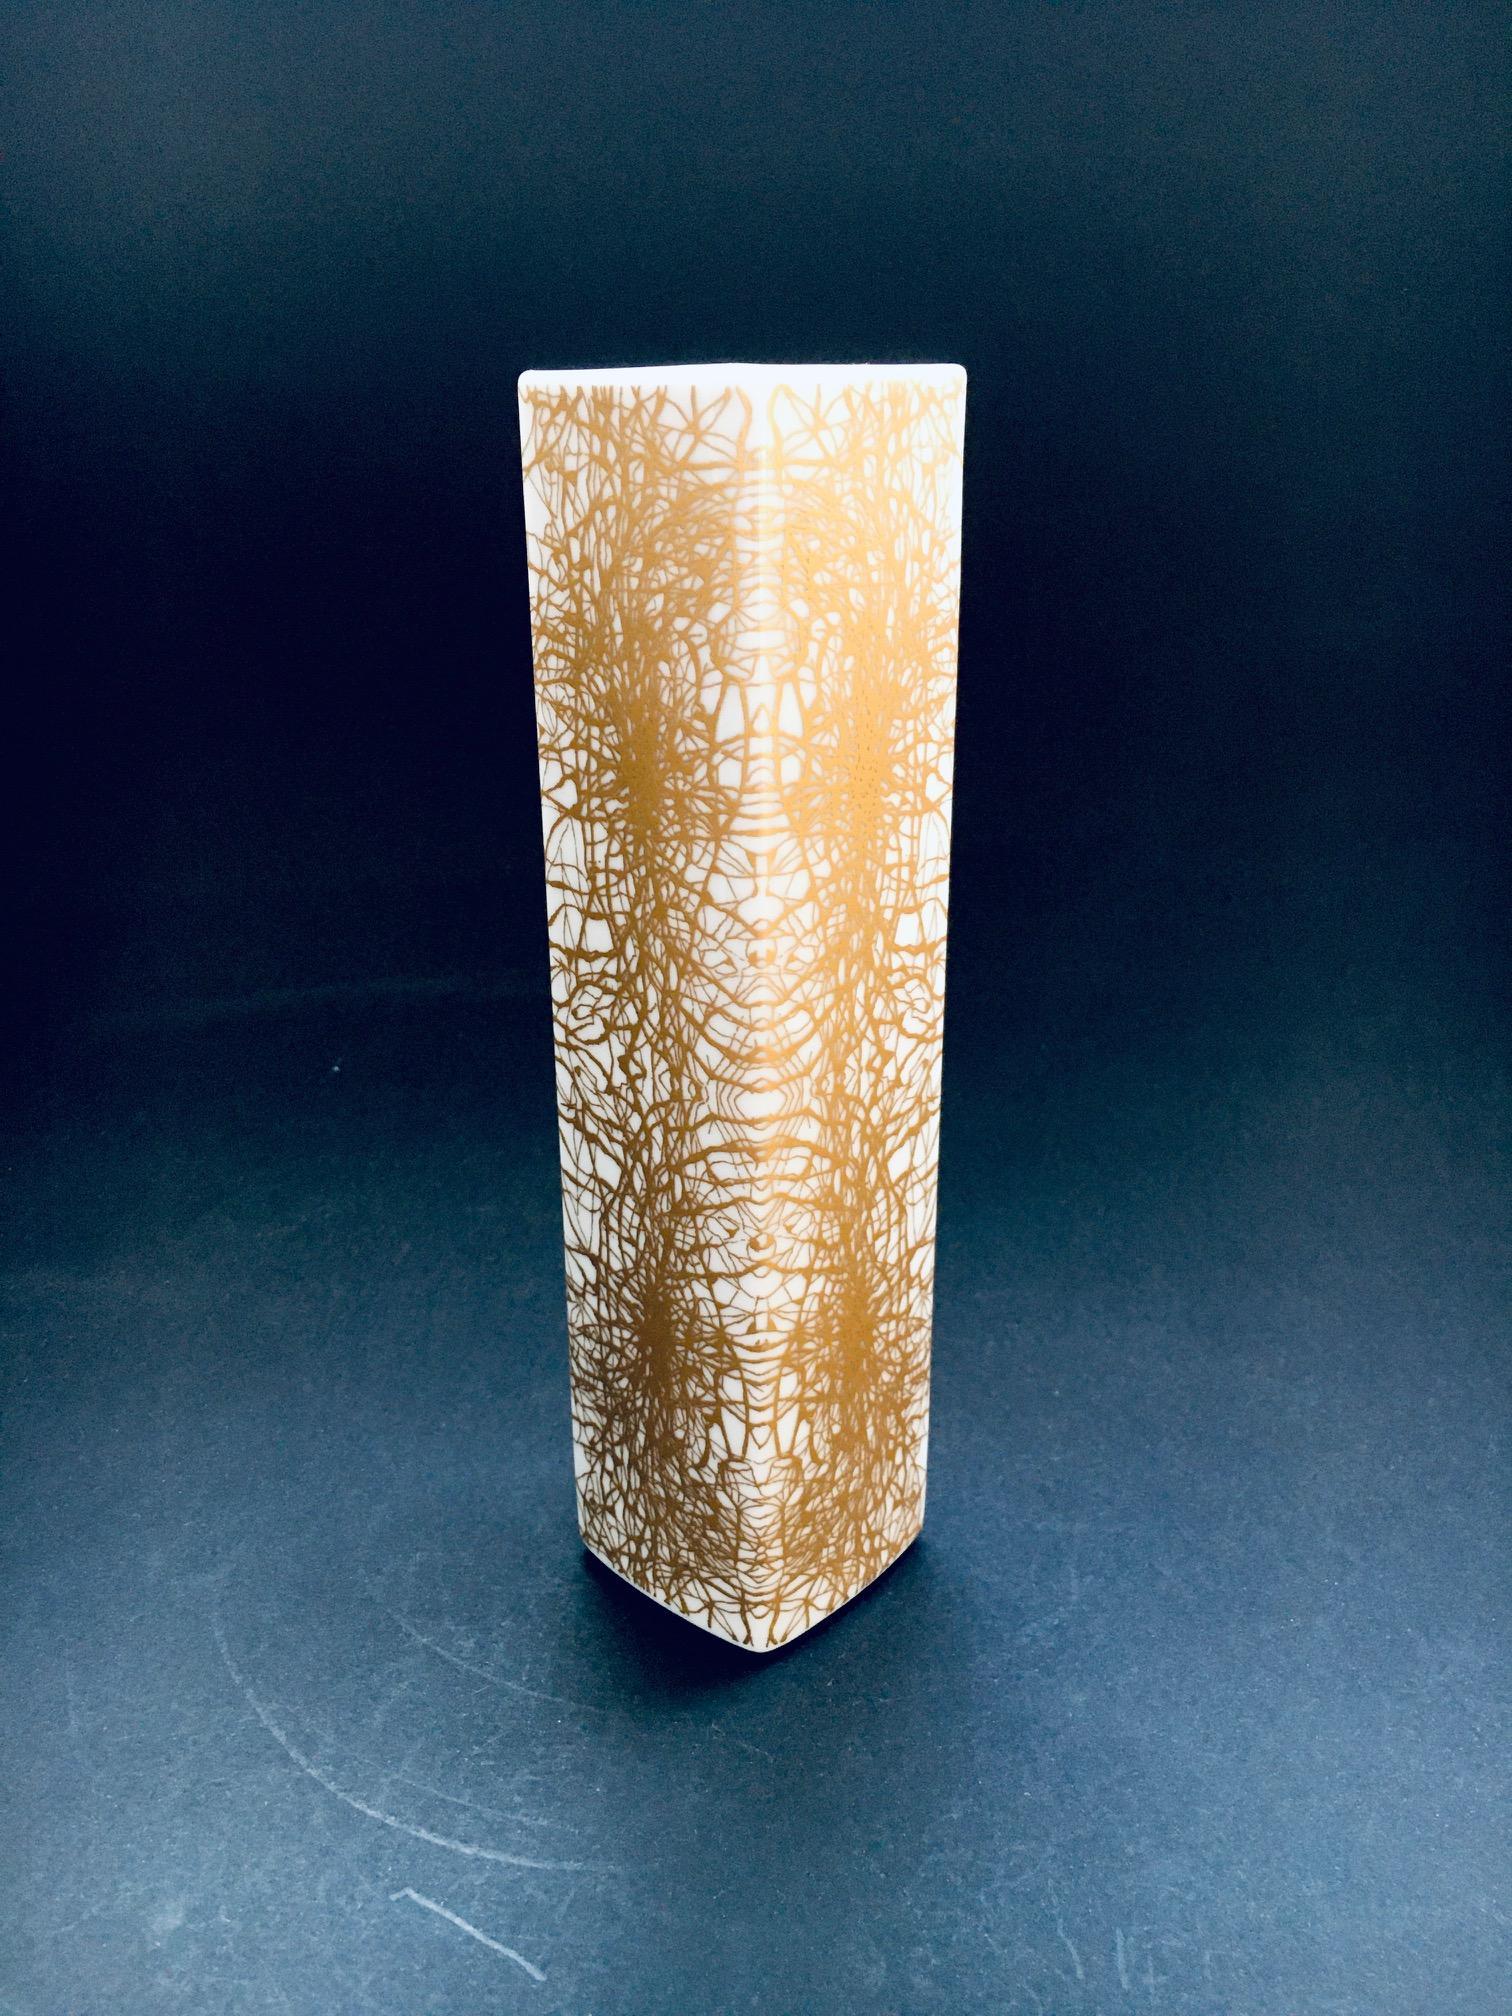 Vintage Midcentury Modern Design Gold Glazed Art Porcelain Ceramic Flower Vase by Heinrich & Co SELB Bavaria, Germany 1970's. White Porcelain with gold abstract pattern motif. Rare Vase in pristine condition. Marked on bottom. Measures 23cm x 6cm x